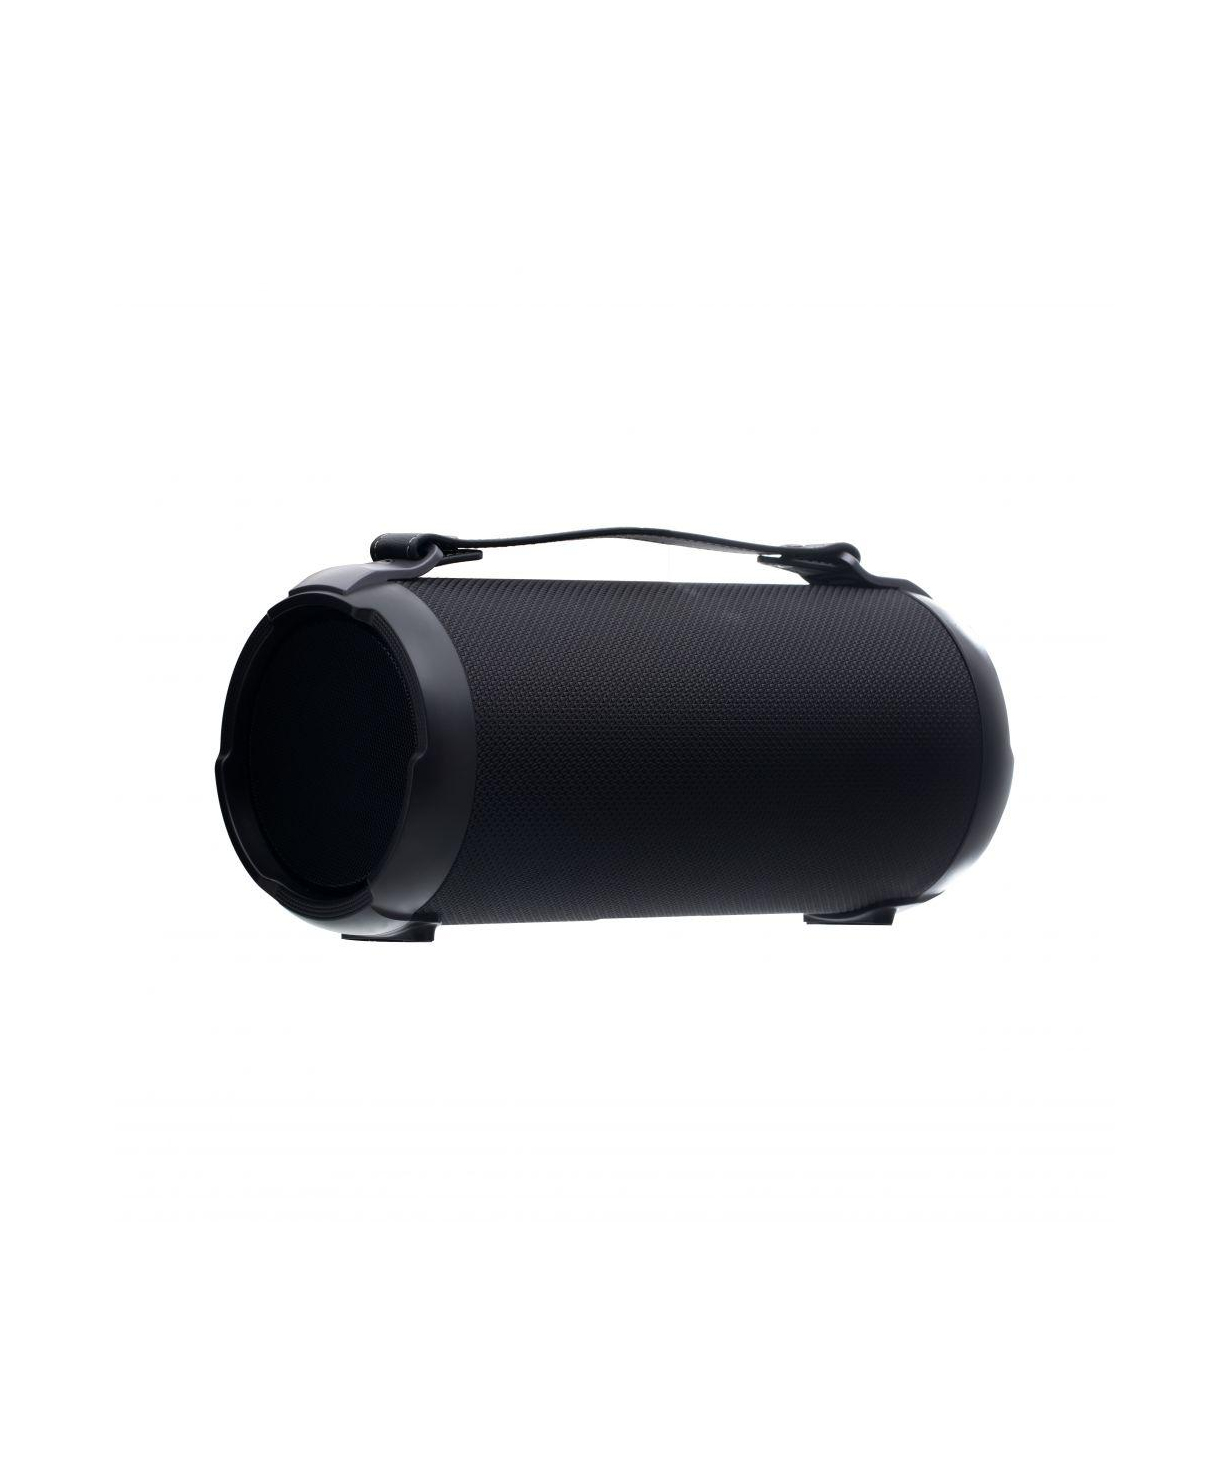 Speaker REMAX RB-M43